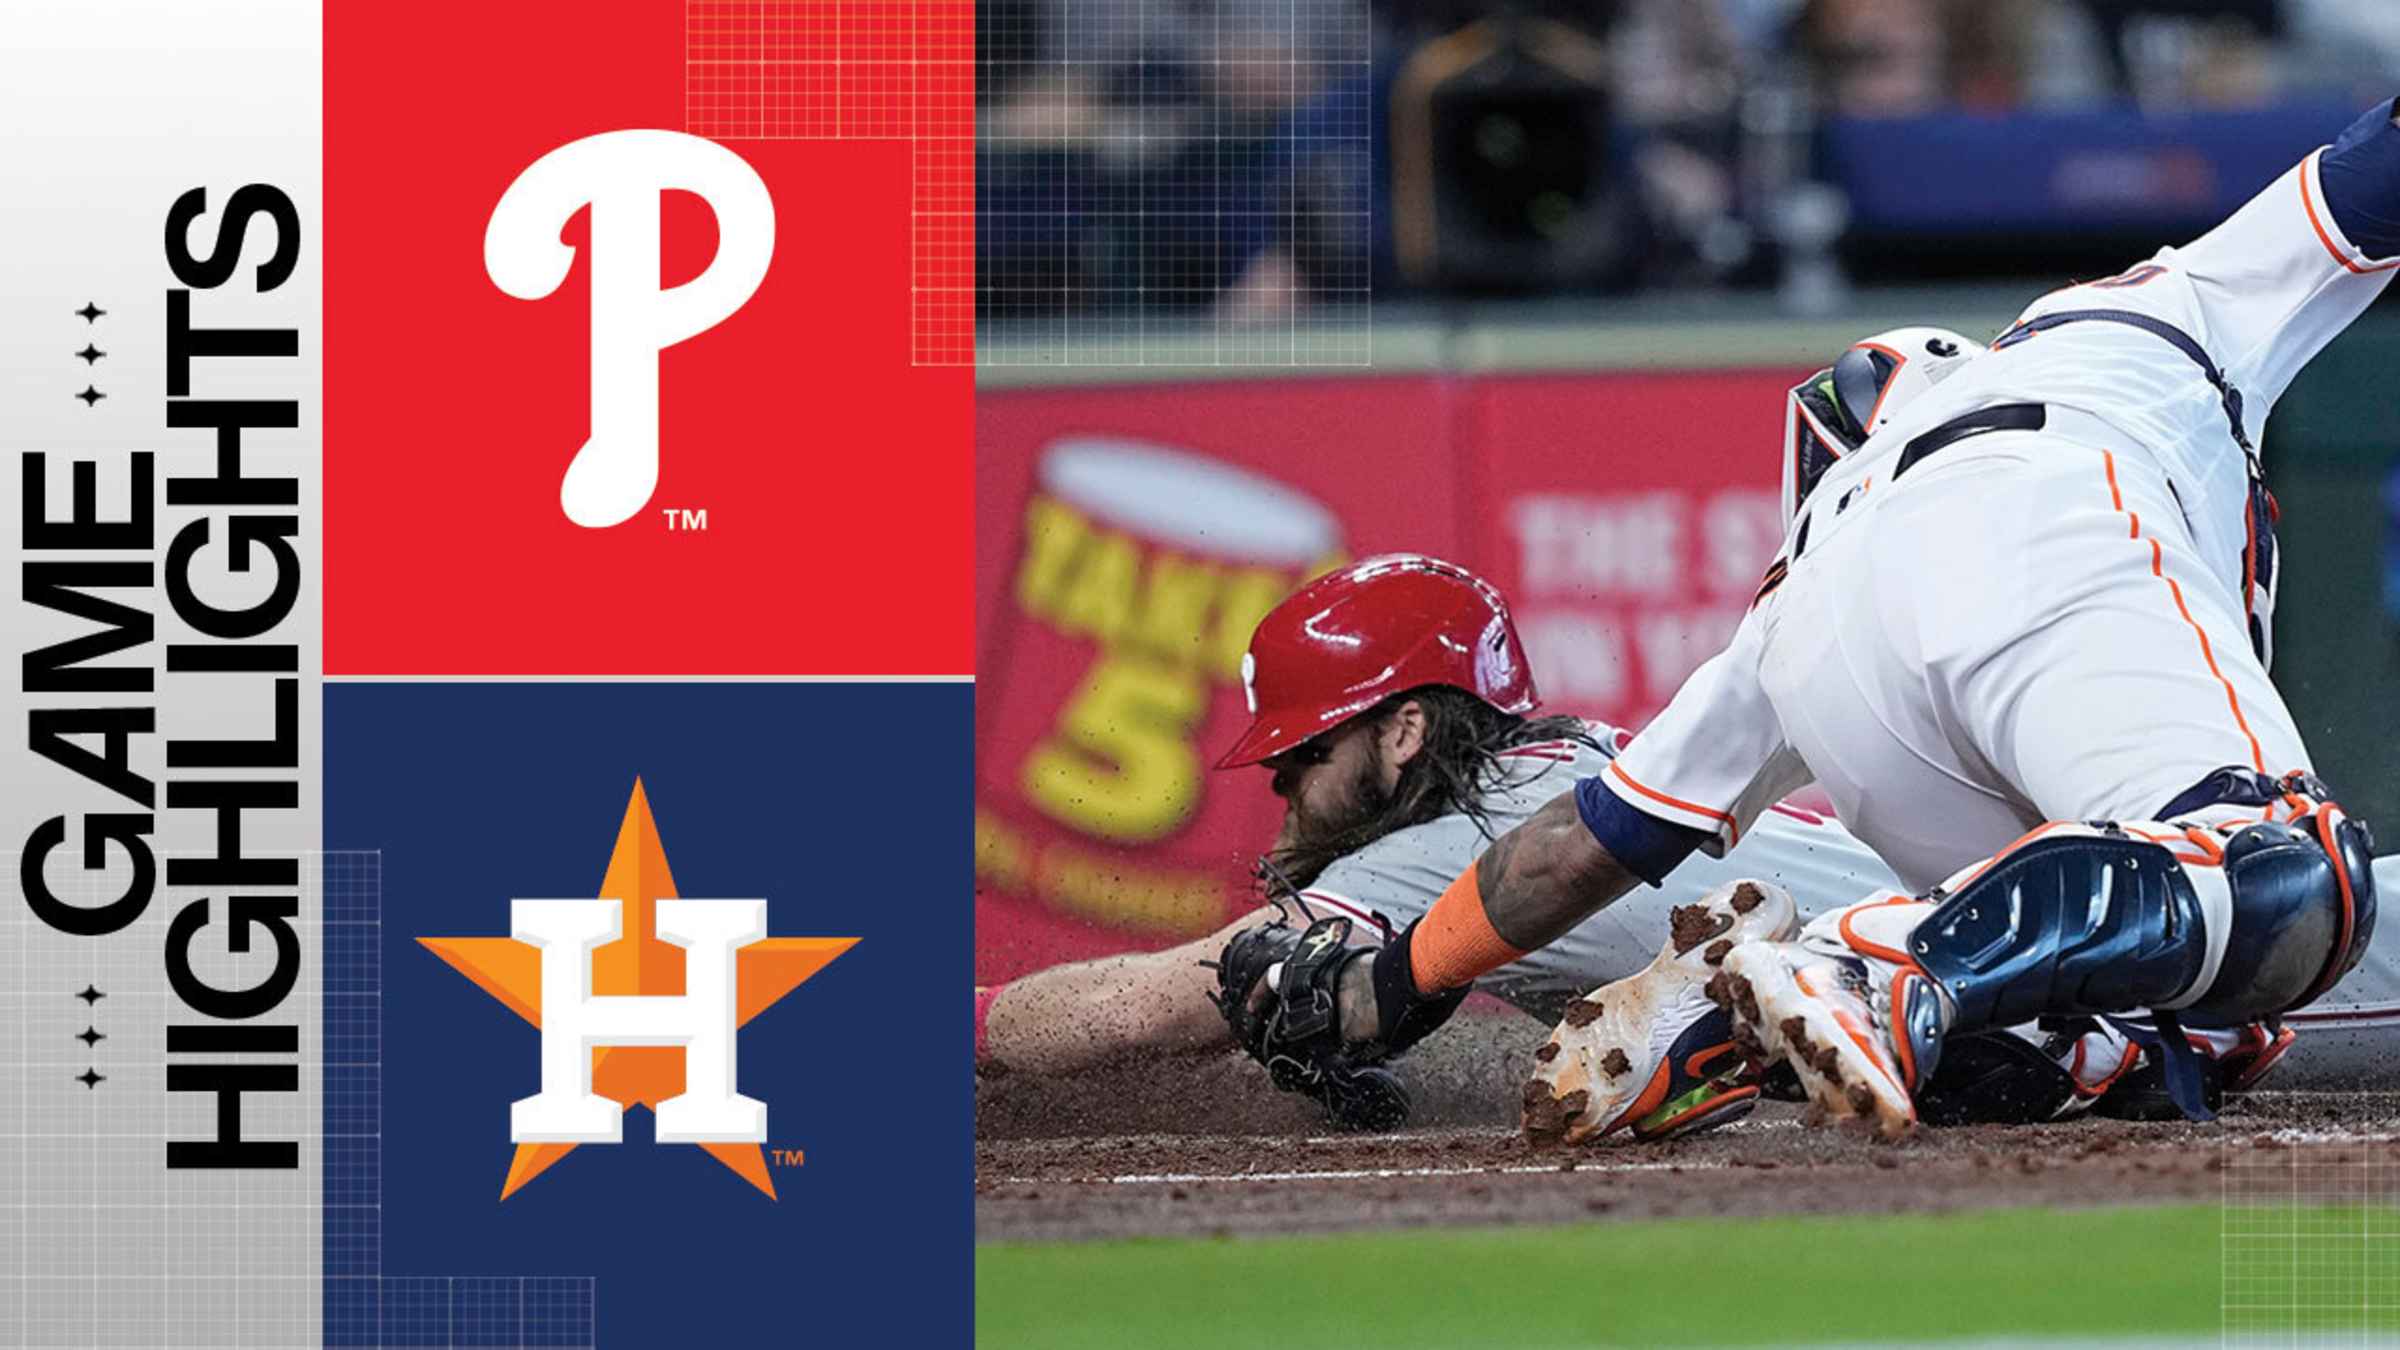 Houston Astros vs. New York Yankees Highlights